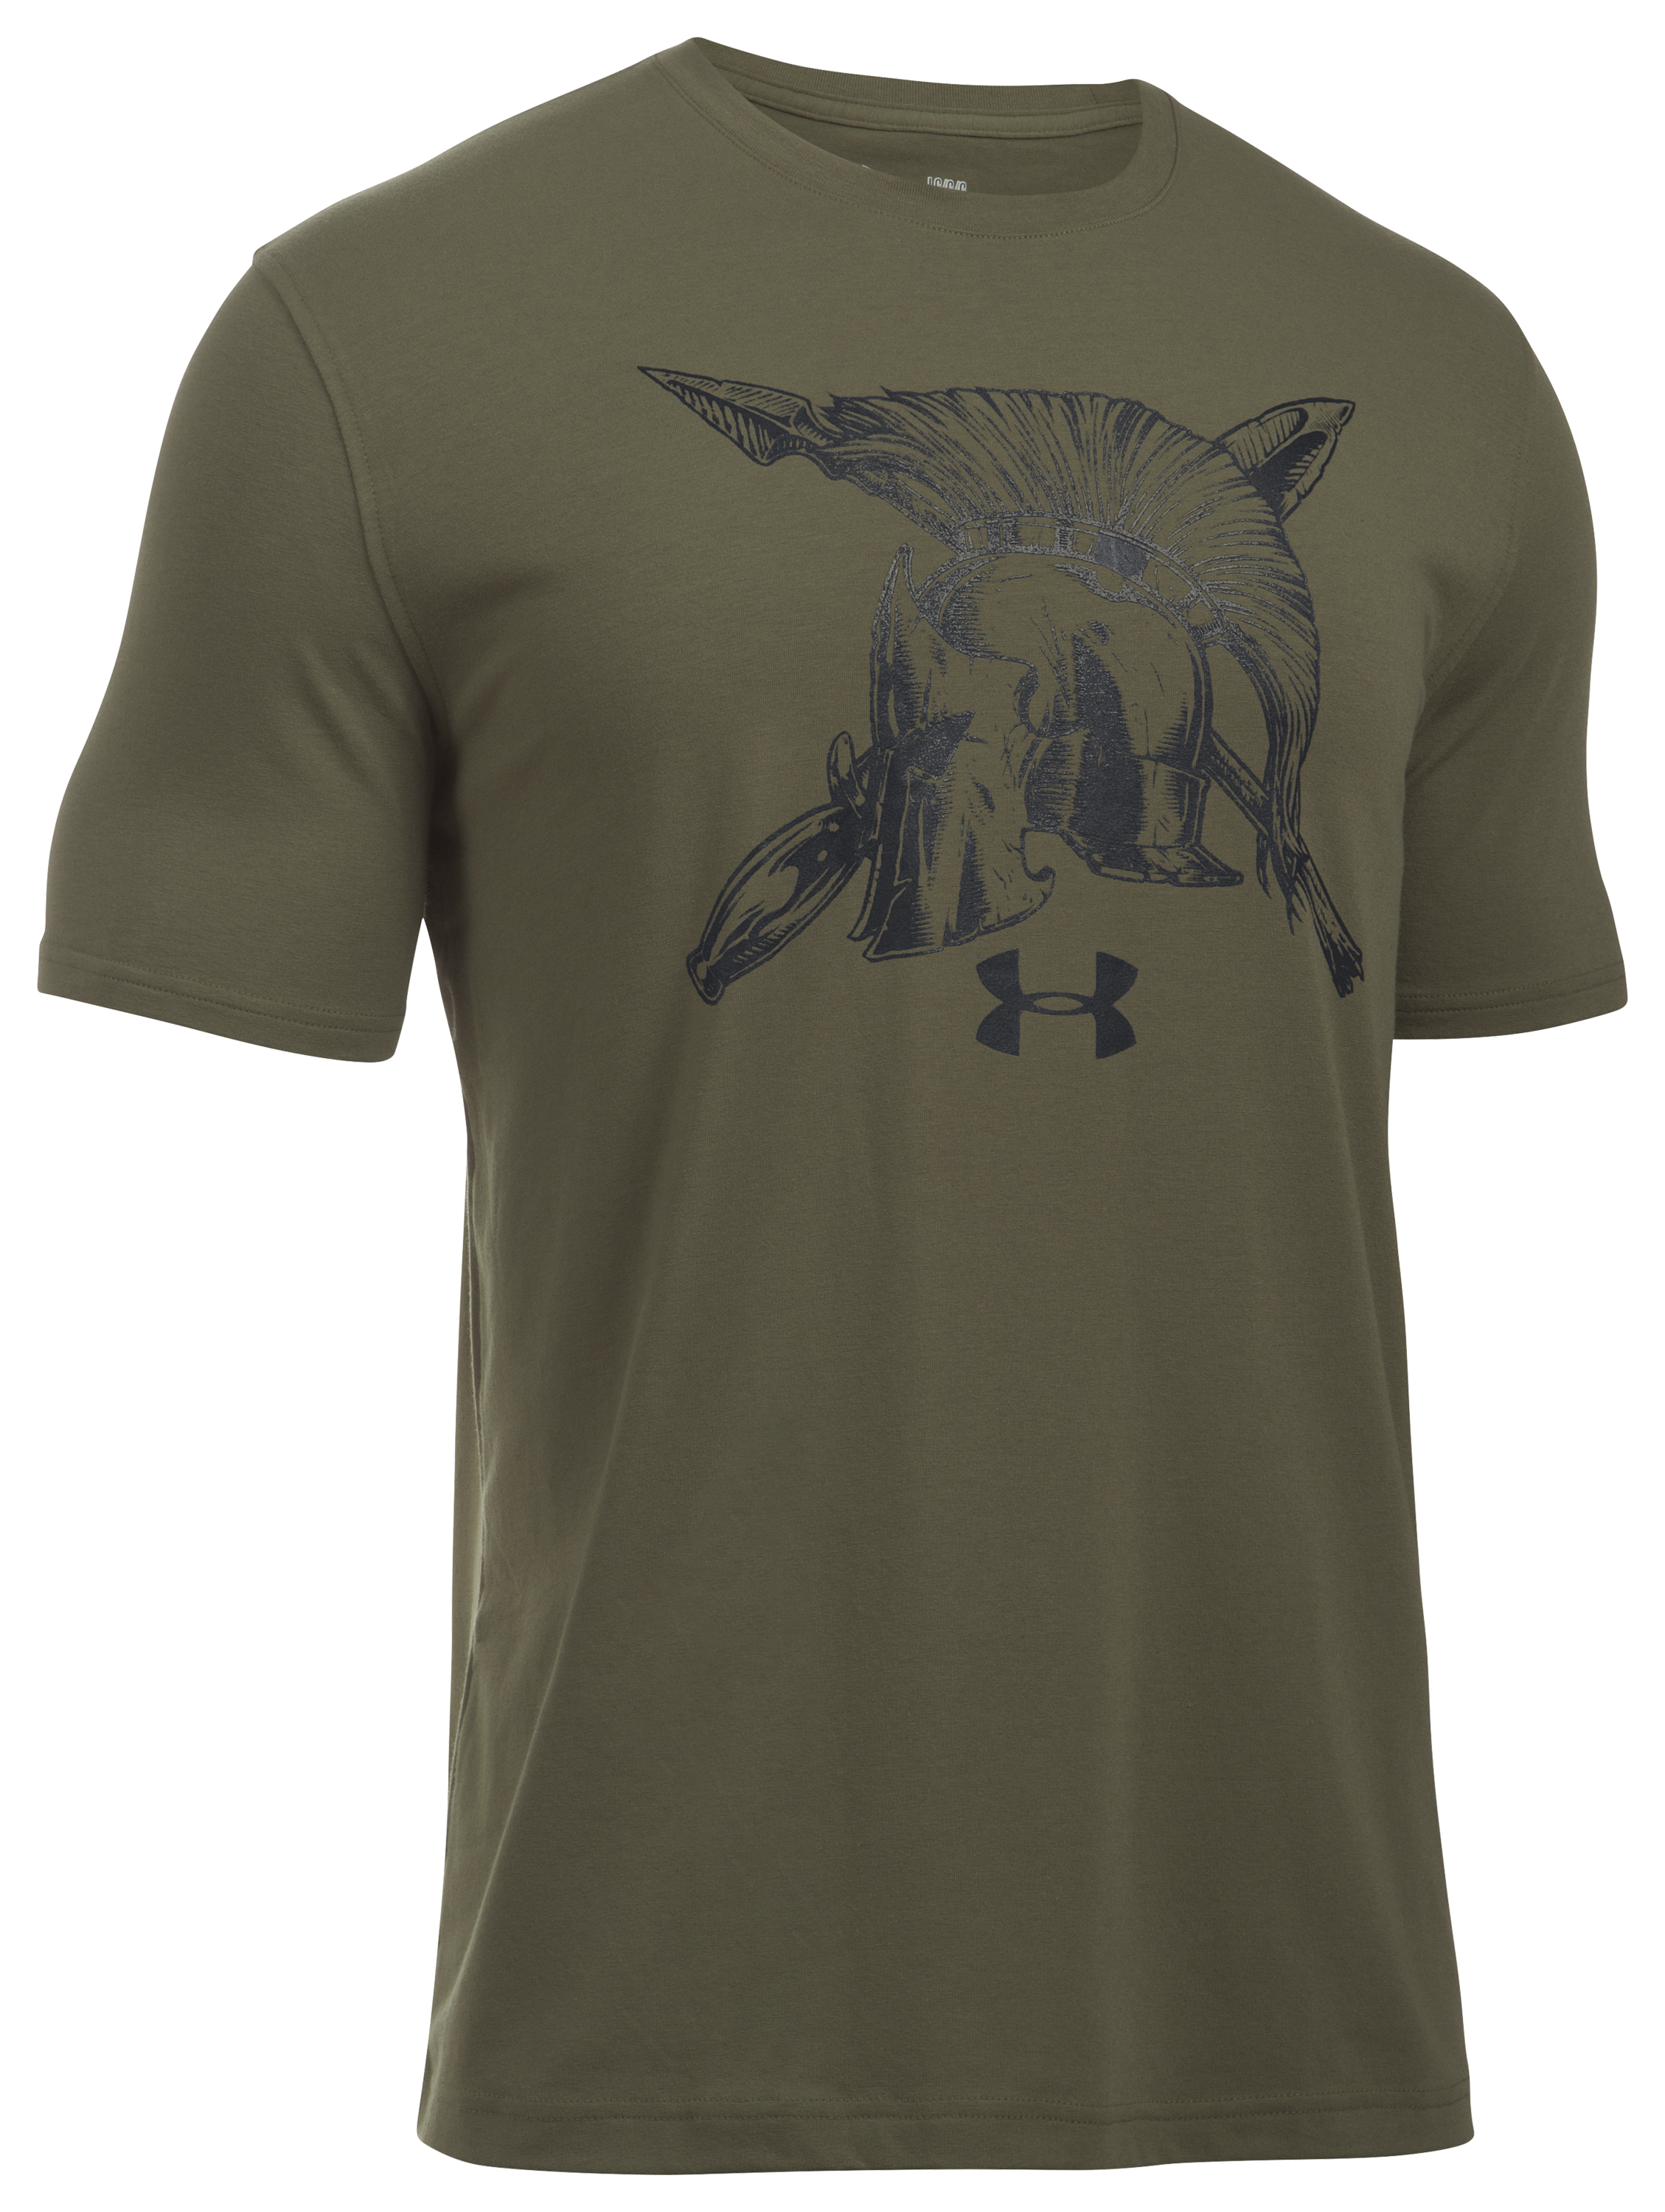 Under Armour Tactical Spartan T-Shirt for Men